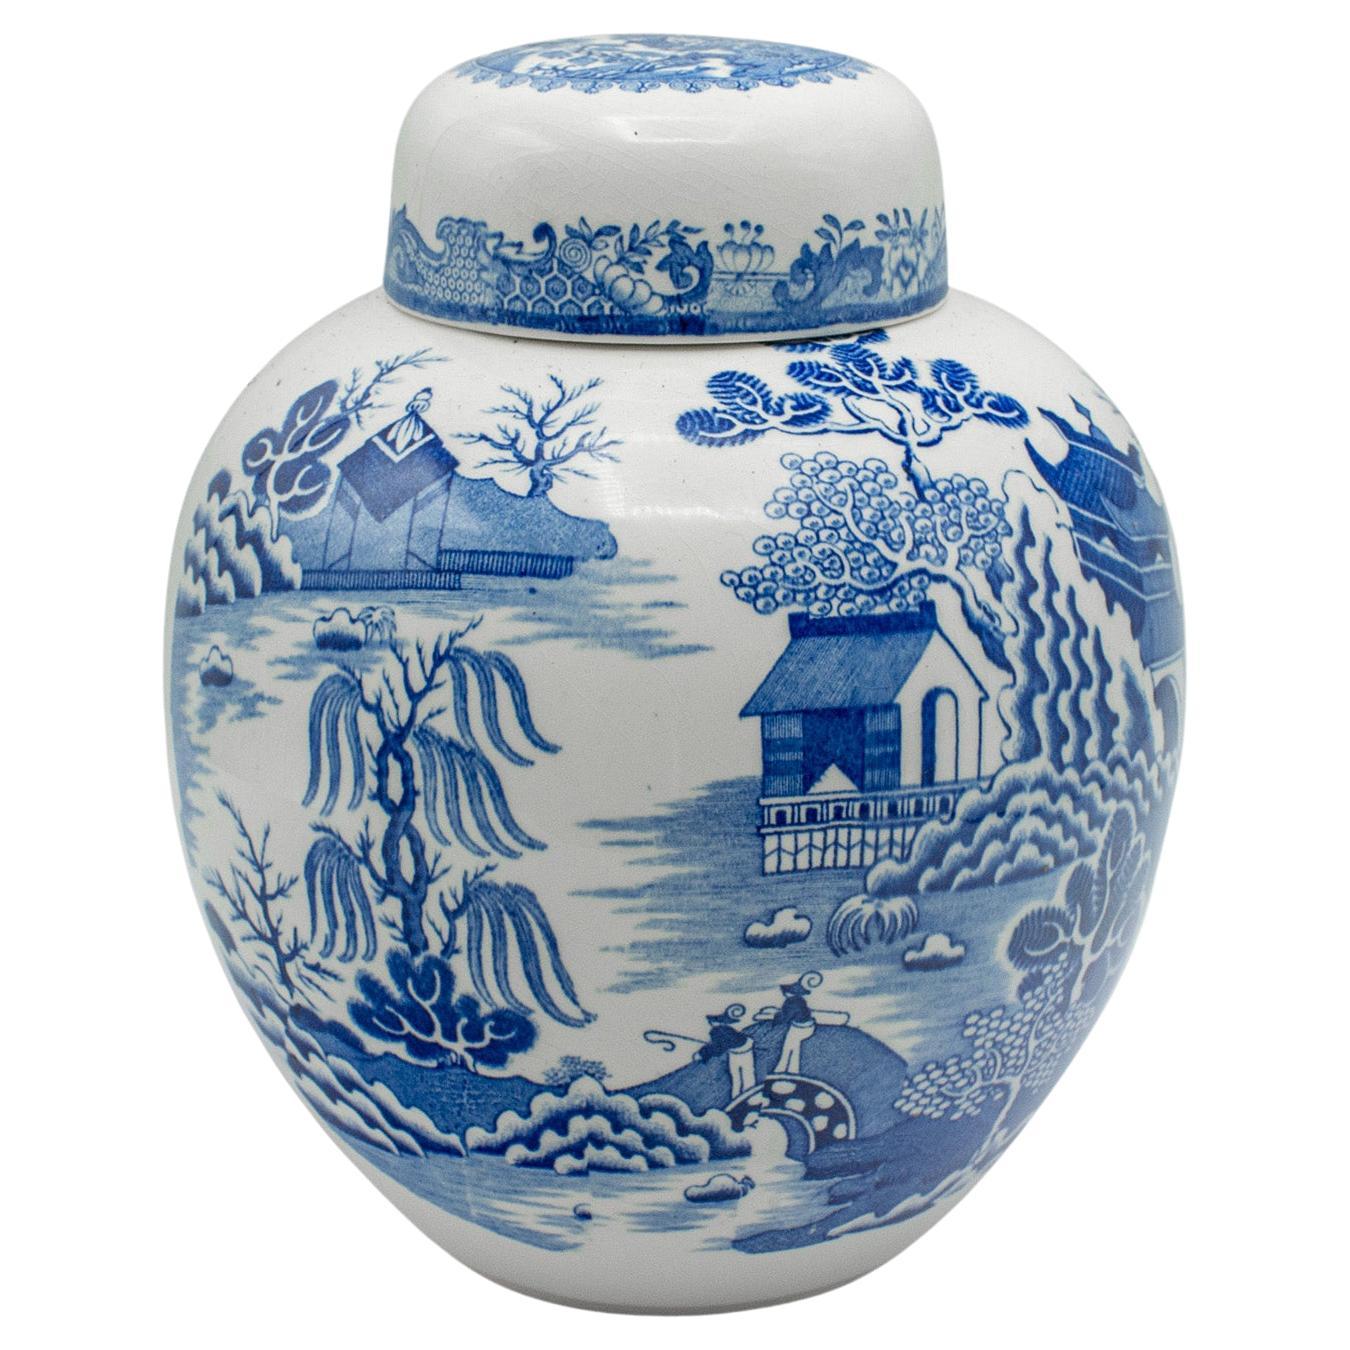 Vintage Ginger Jar, English, Ceramic, Decorative Spice Urn, Blue and White, 1970 For Sale